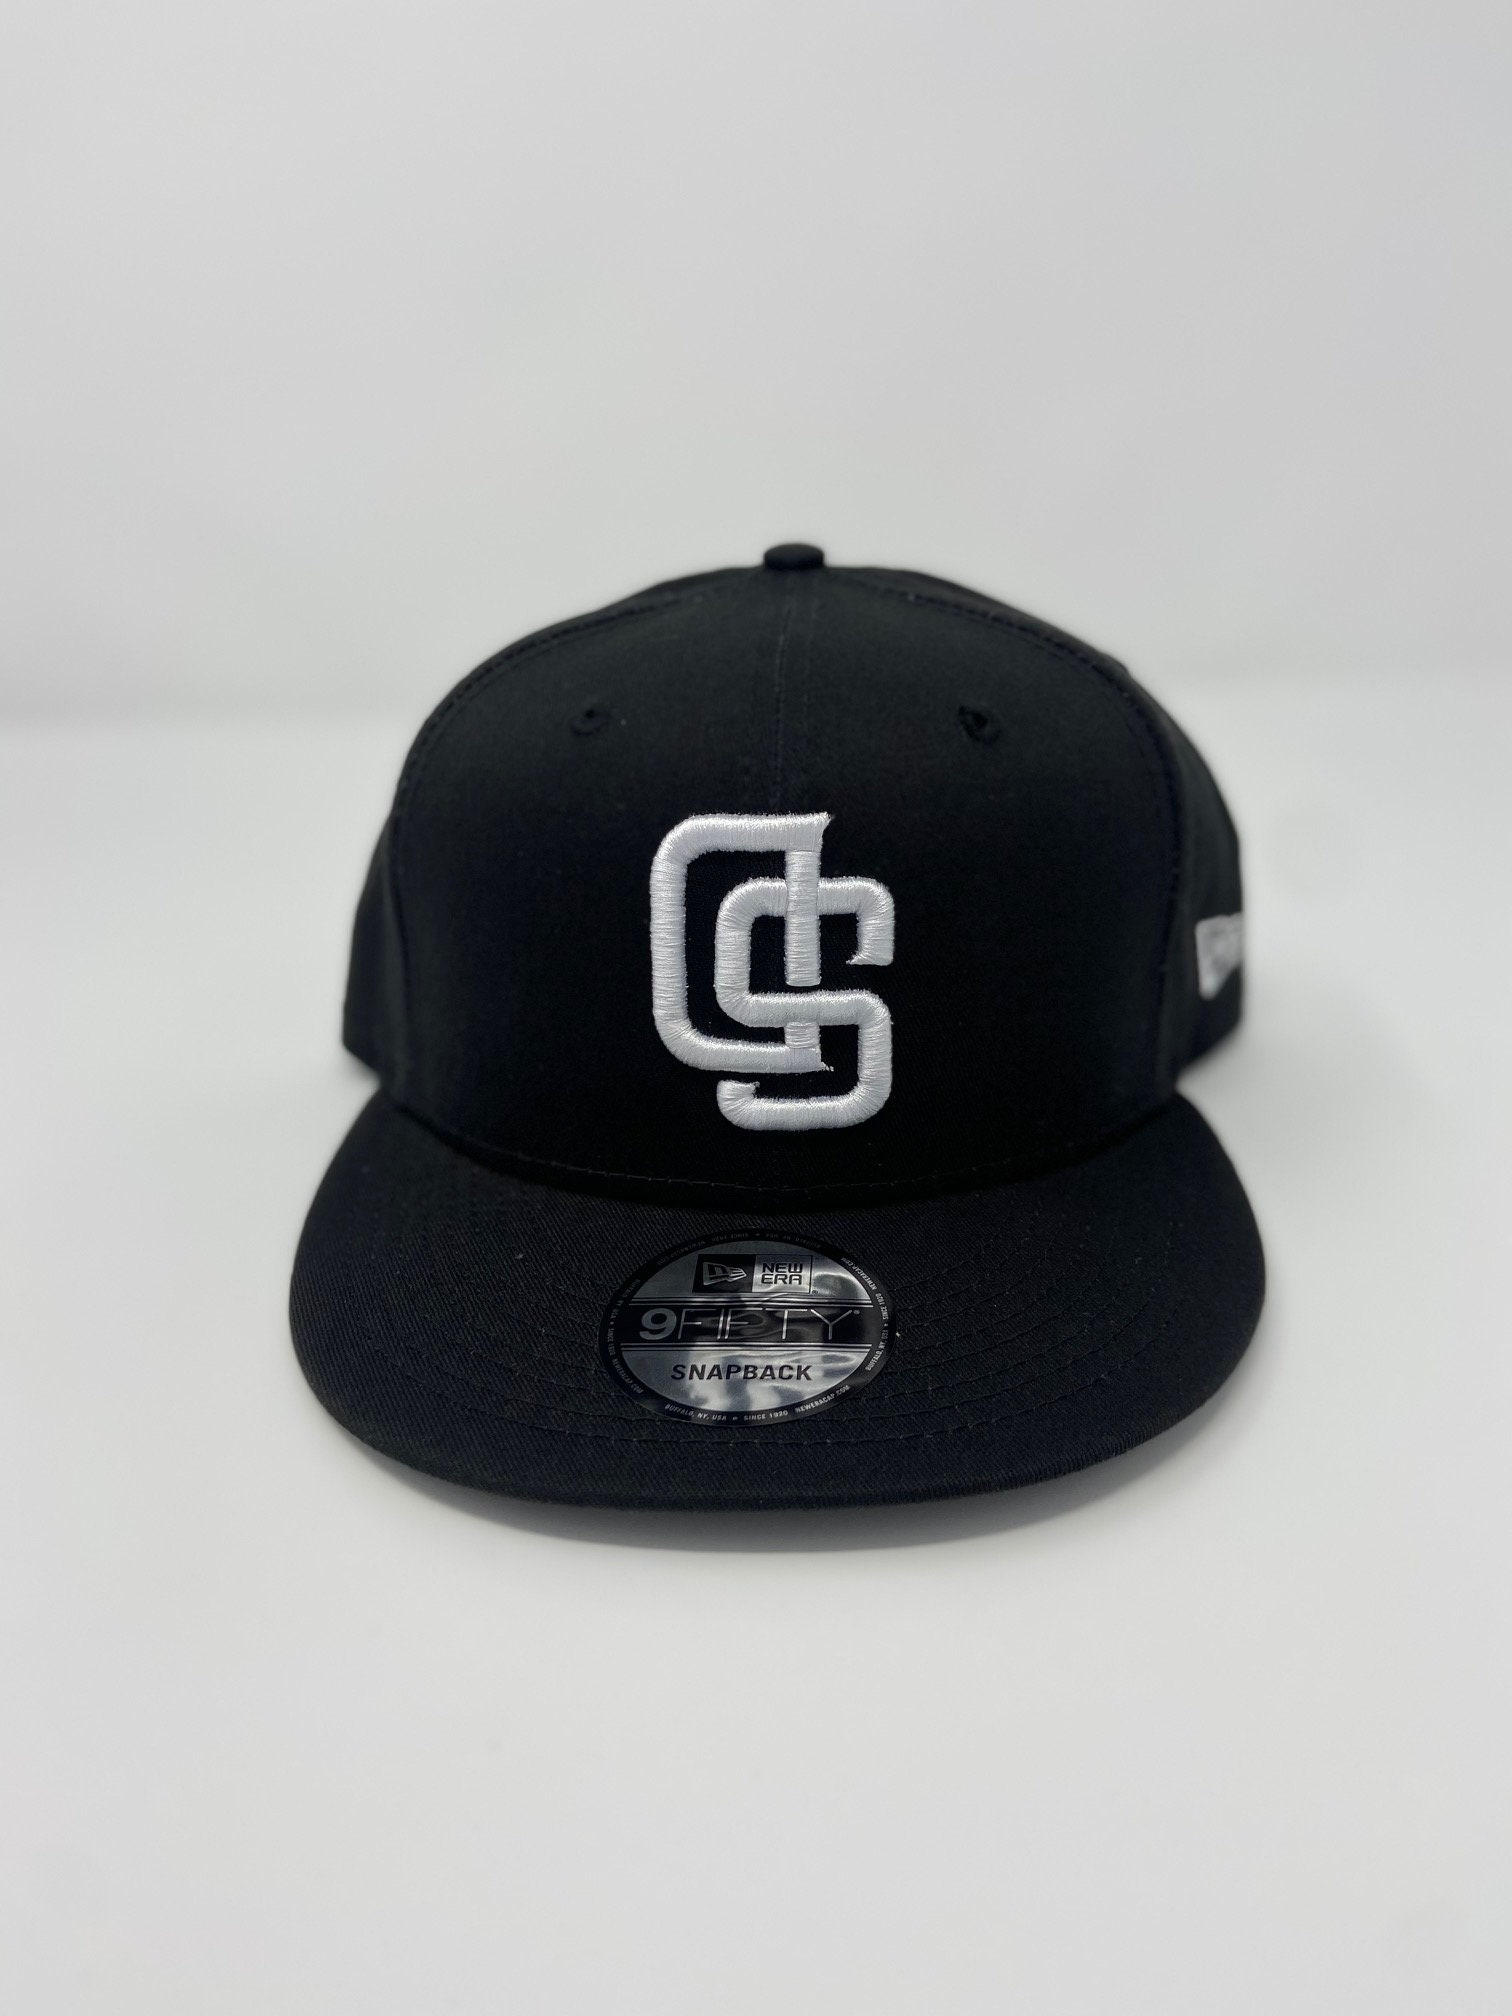 San Diego Padres Beat LA Embroidered Dad Hat Baseball Cap